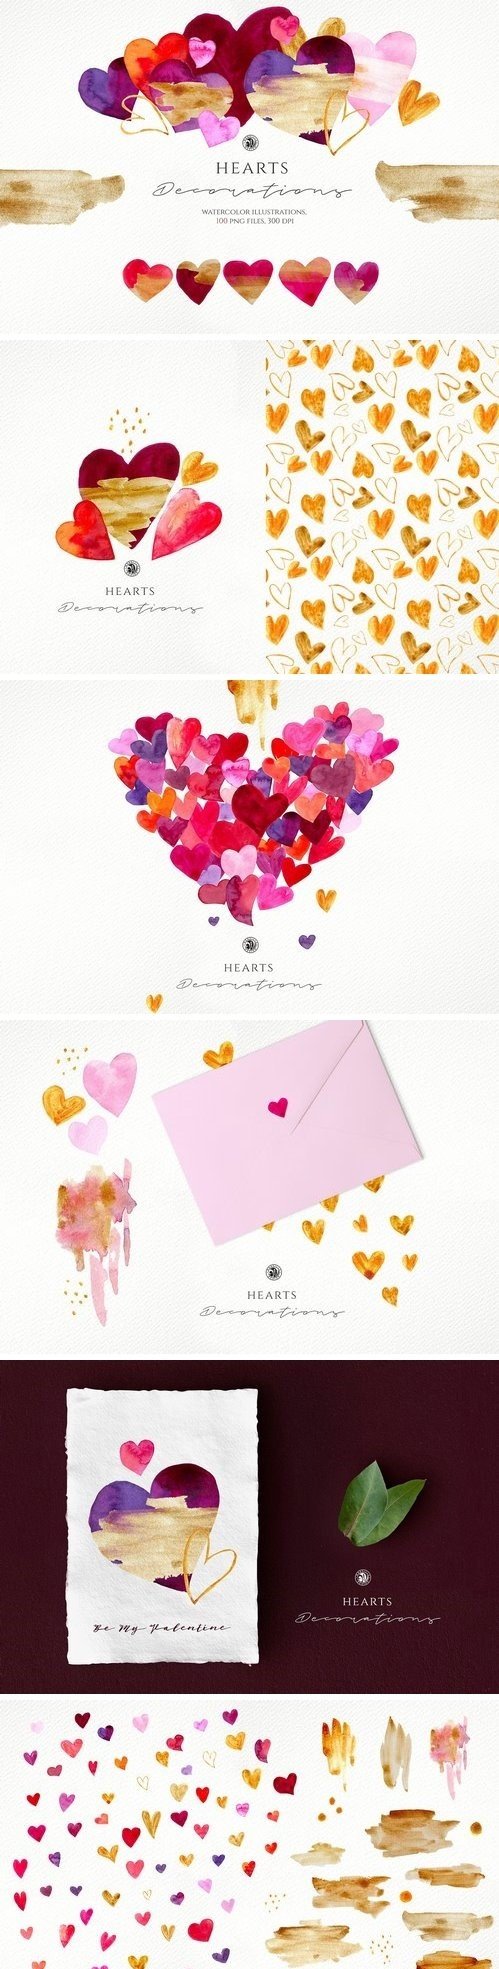 CM - Hearts - watercolor illustrations 3221567